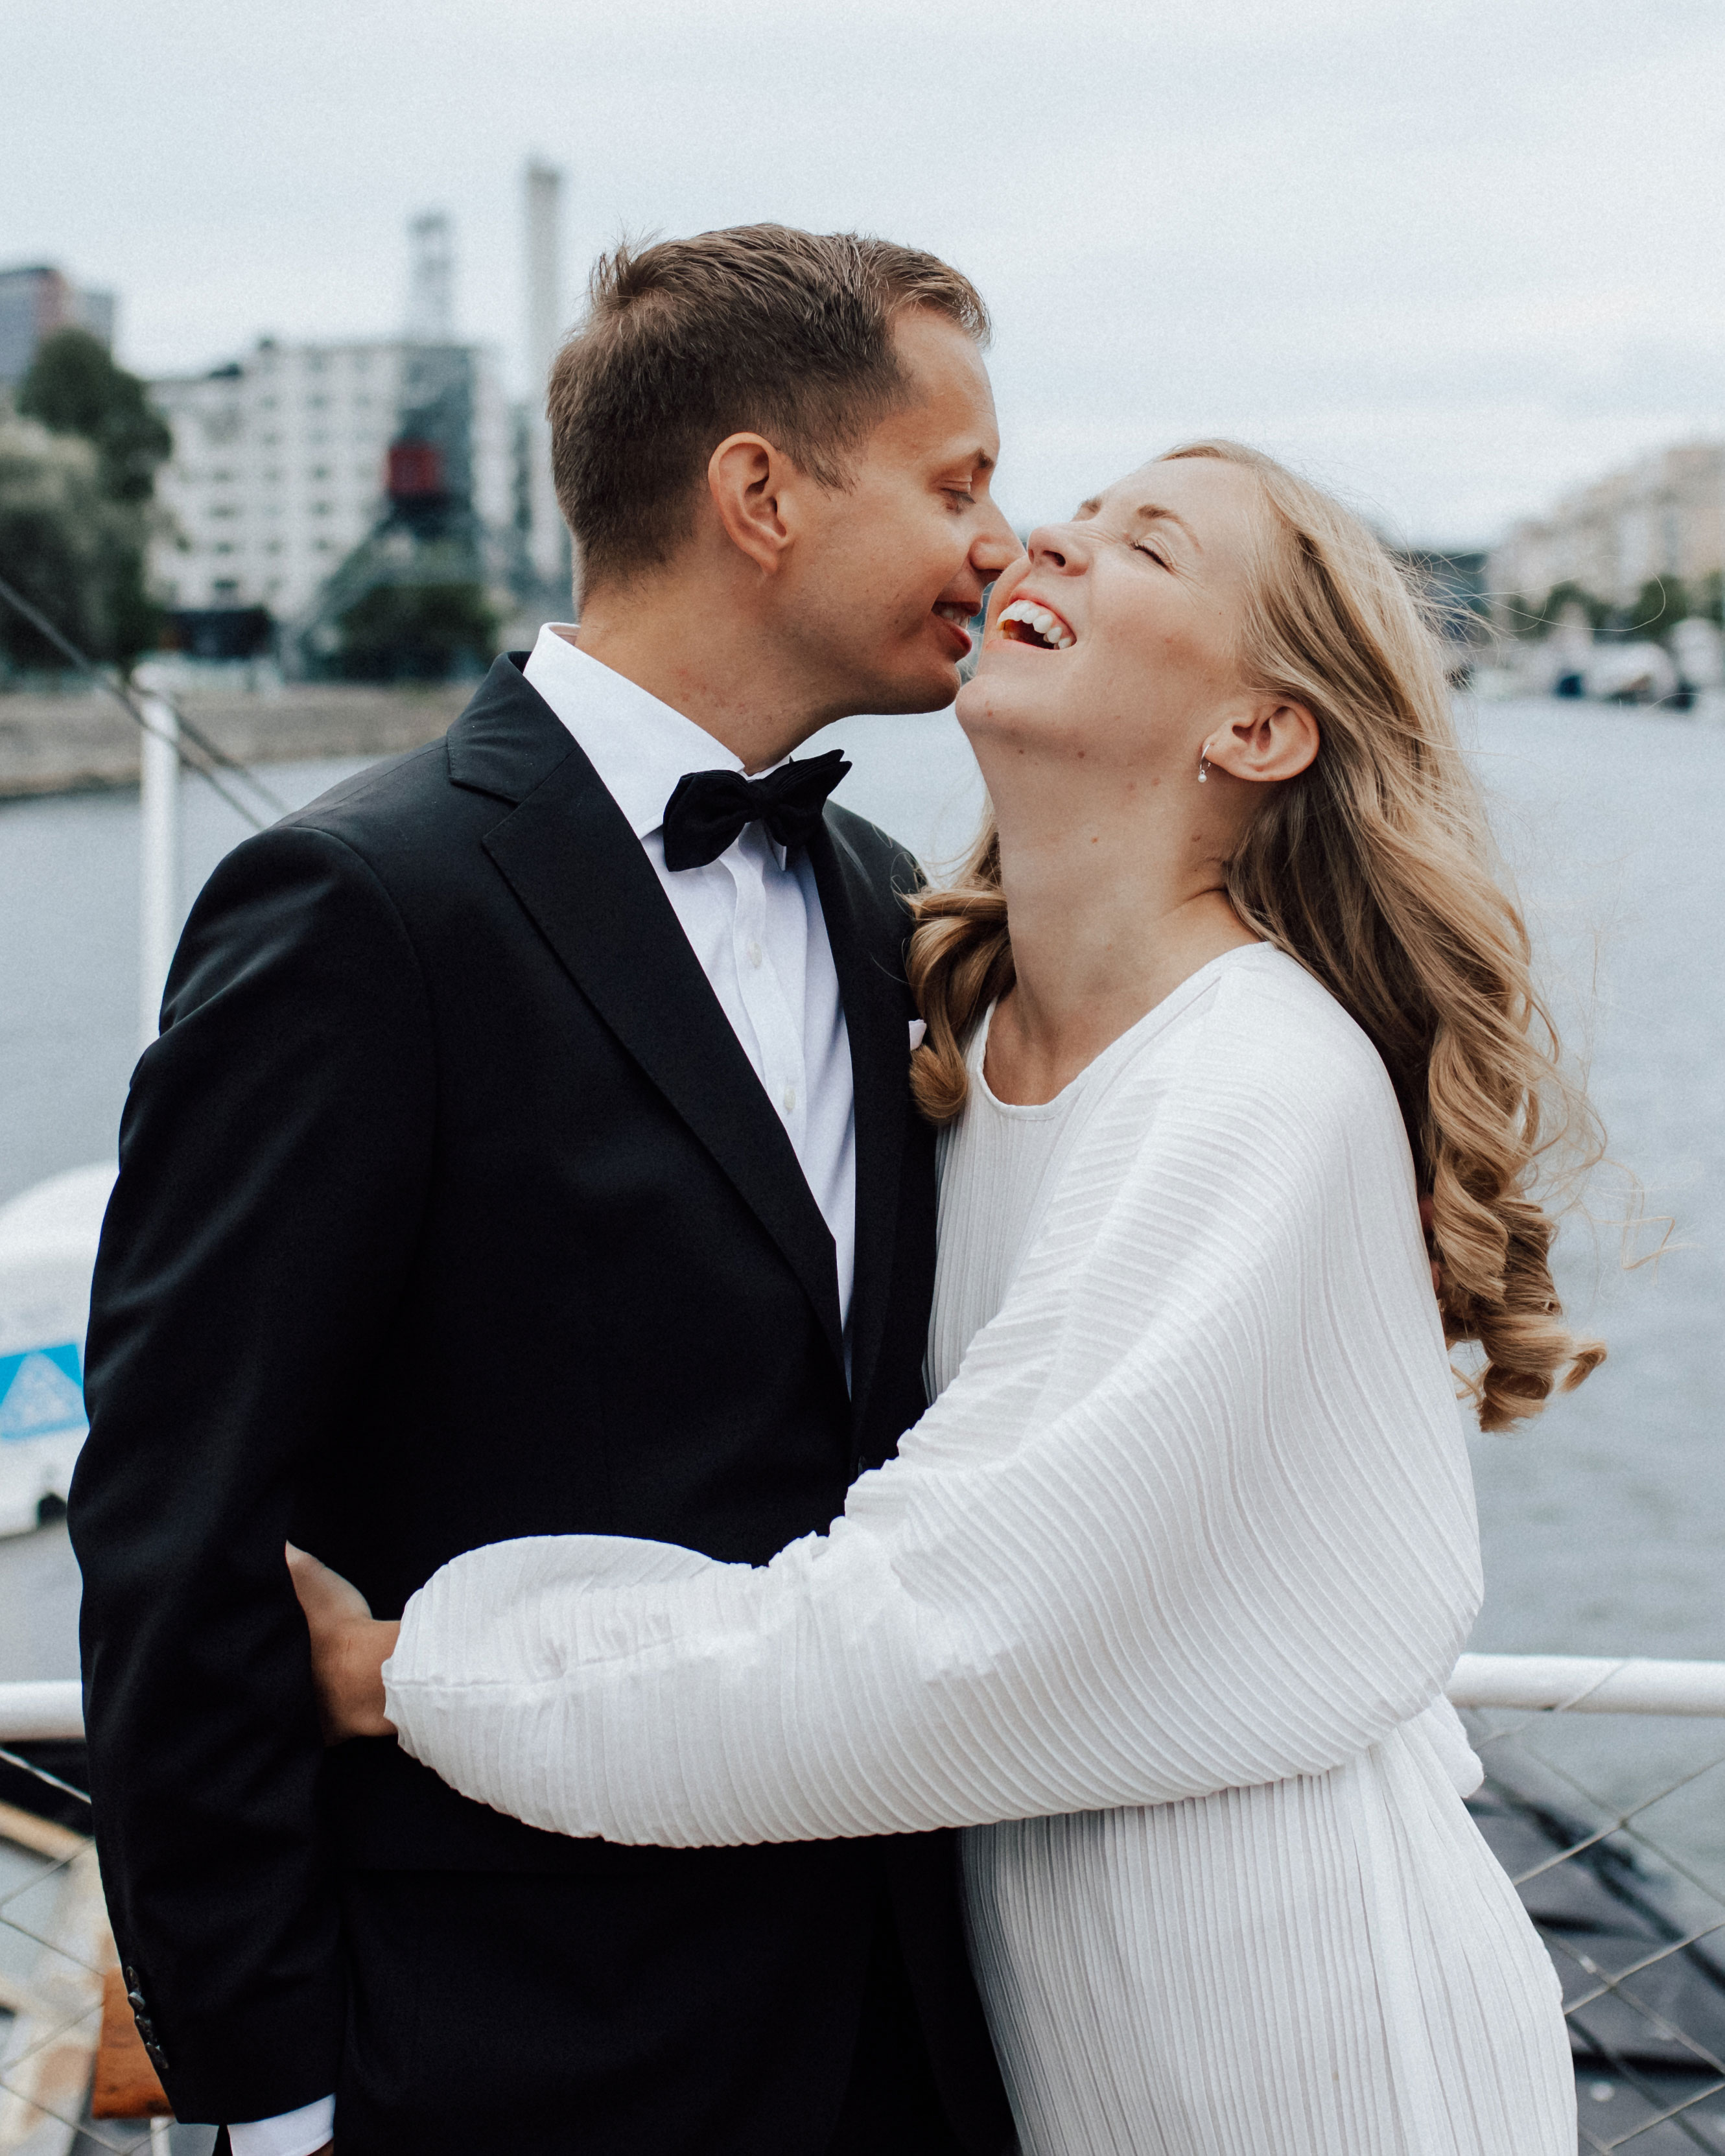 brollop wedding vigsel sjohuet lidingo stockholm - Recent weddings